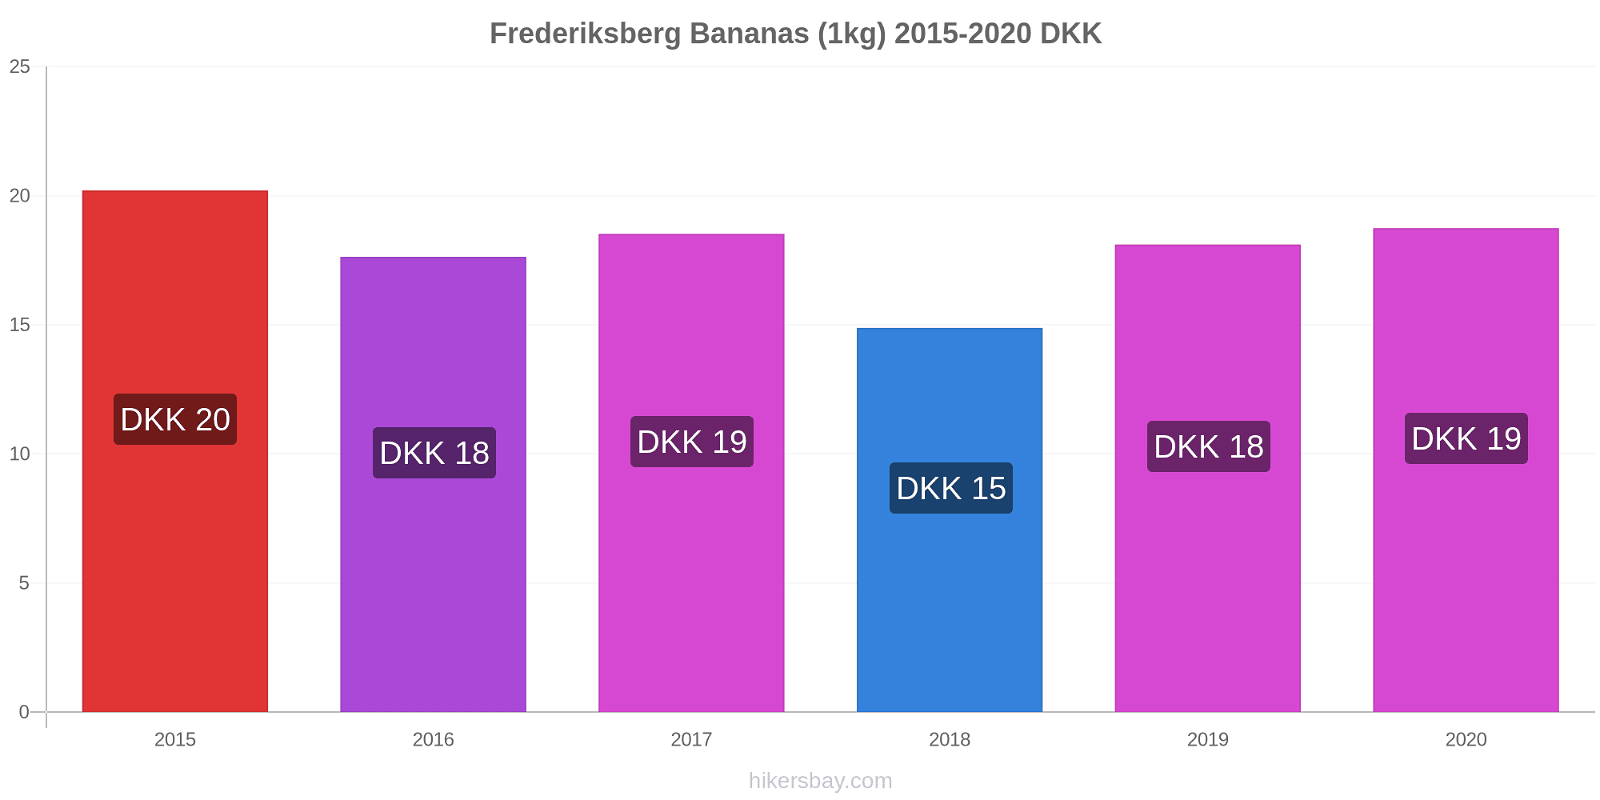 Frederiksberg price changes Bananas (1kg) hikersbay.com